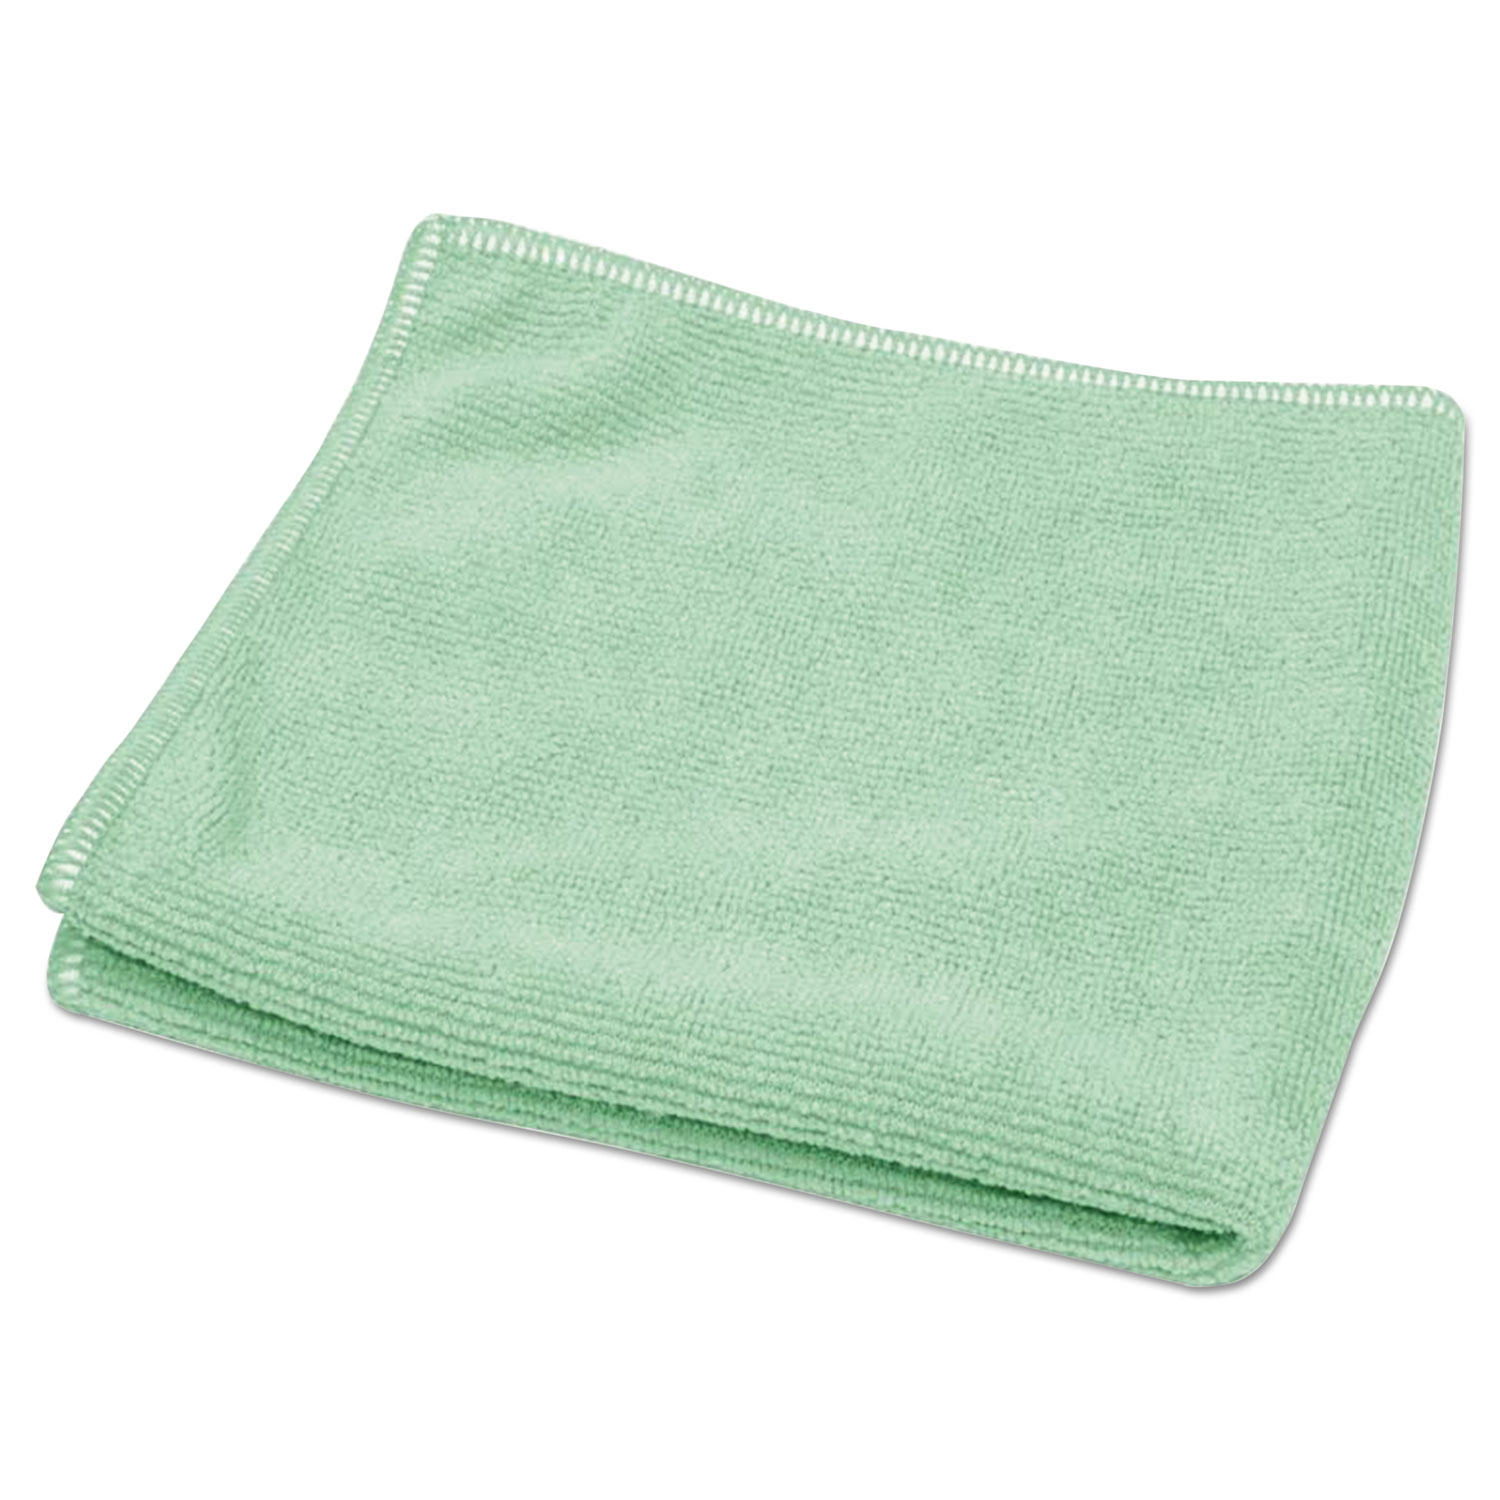 TASKI Microstandard Cloths, Green, 12 1/2 x 12 1/2, 20/Pack